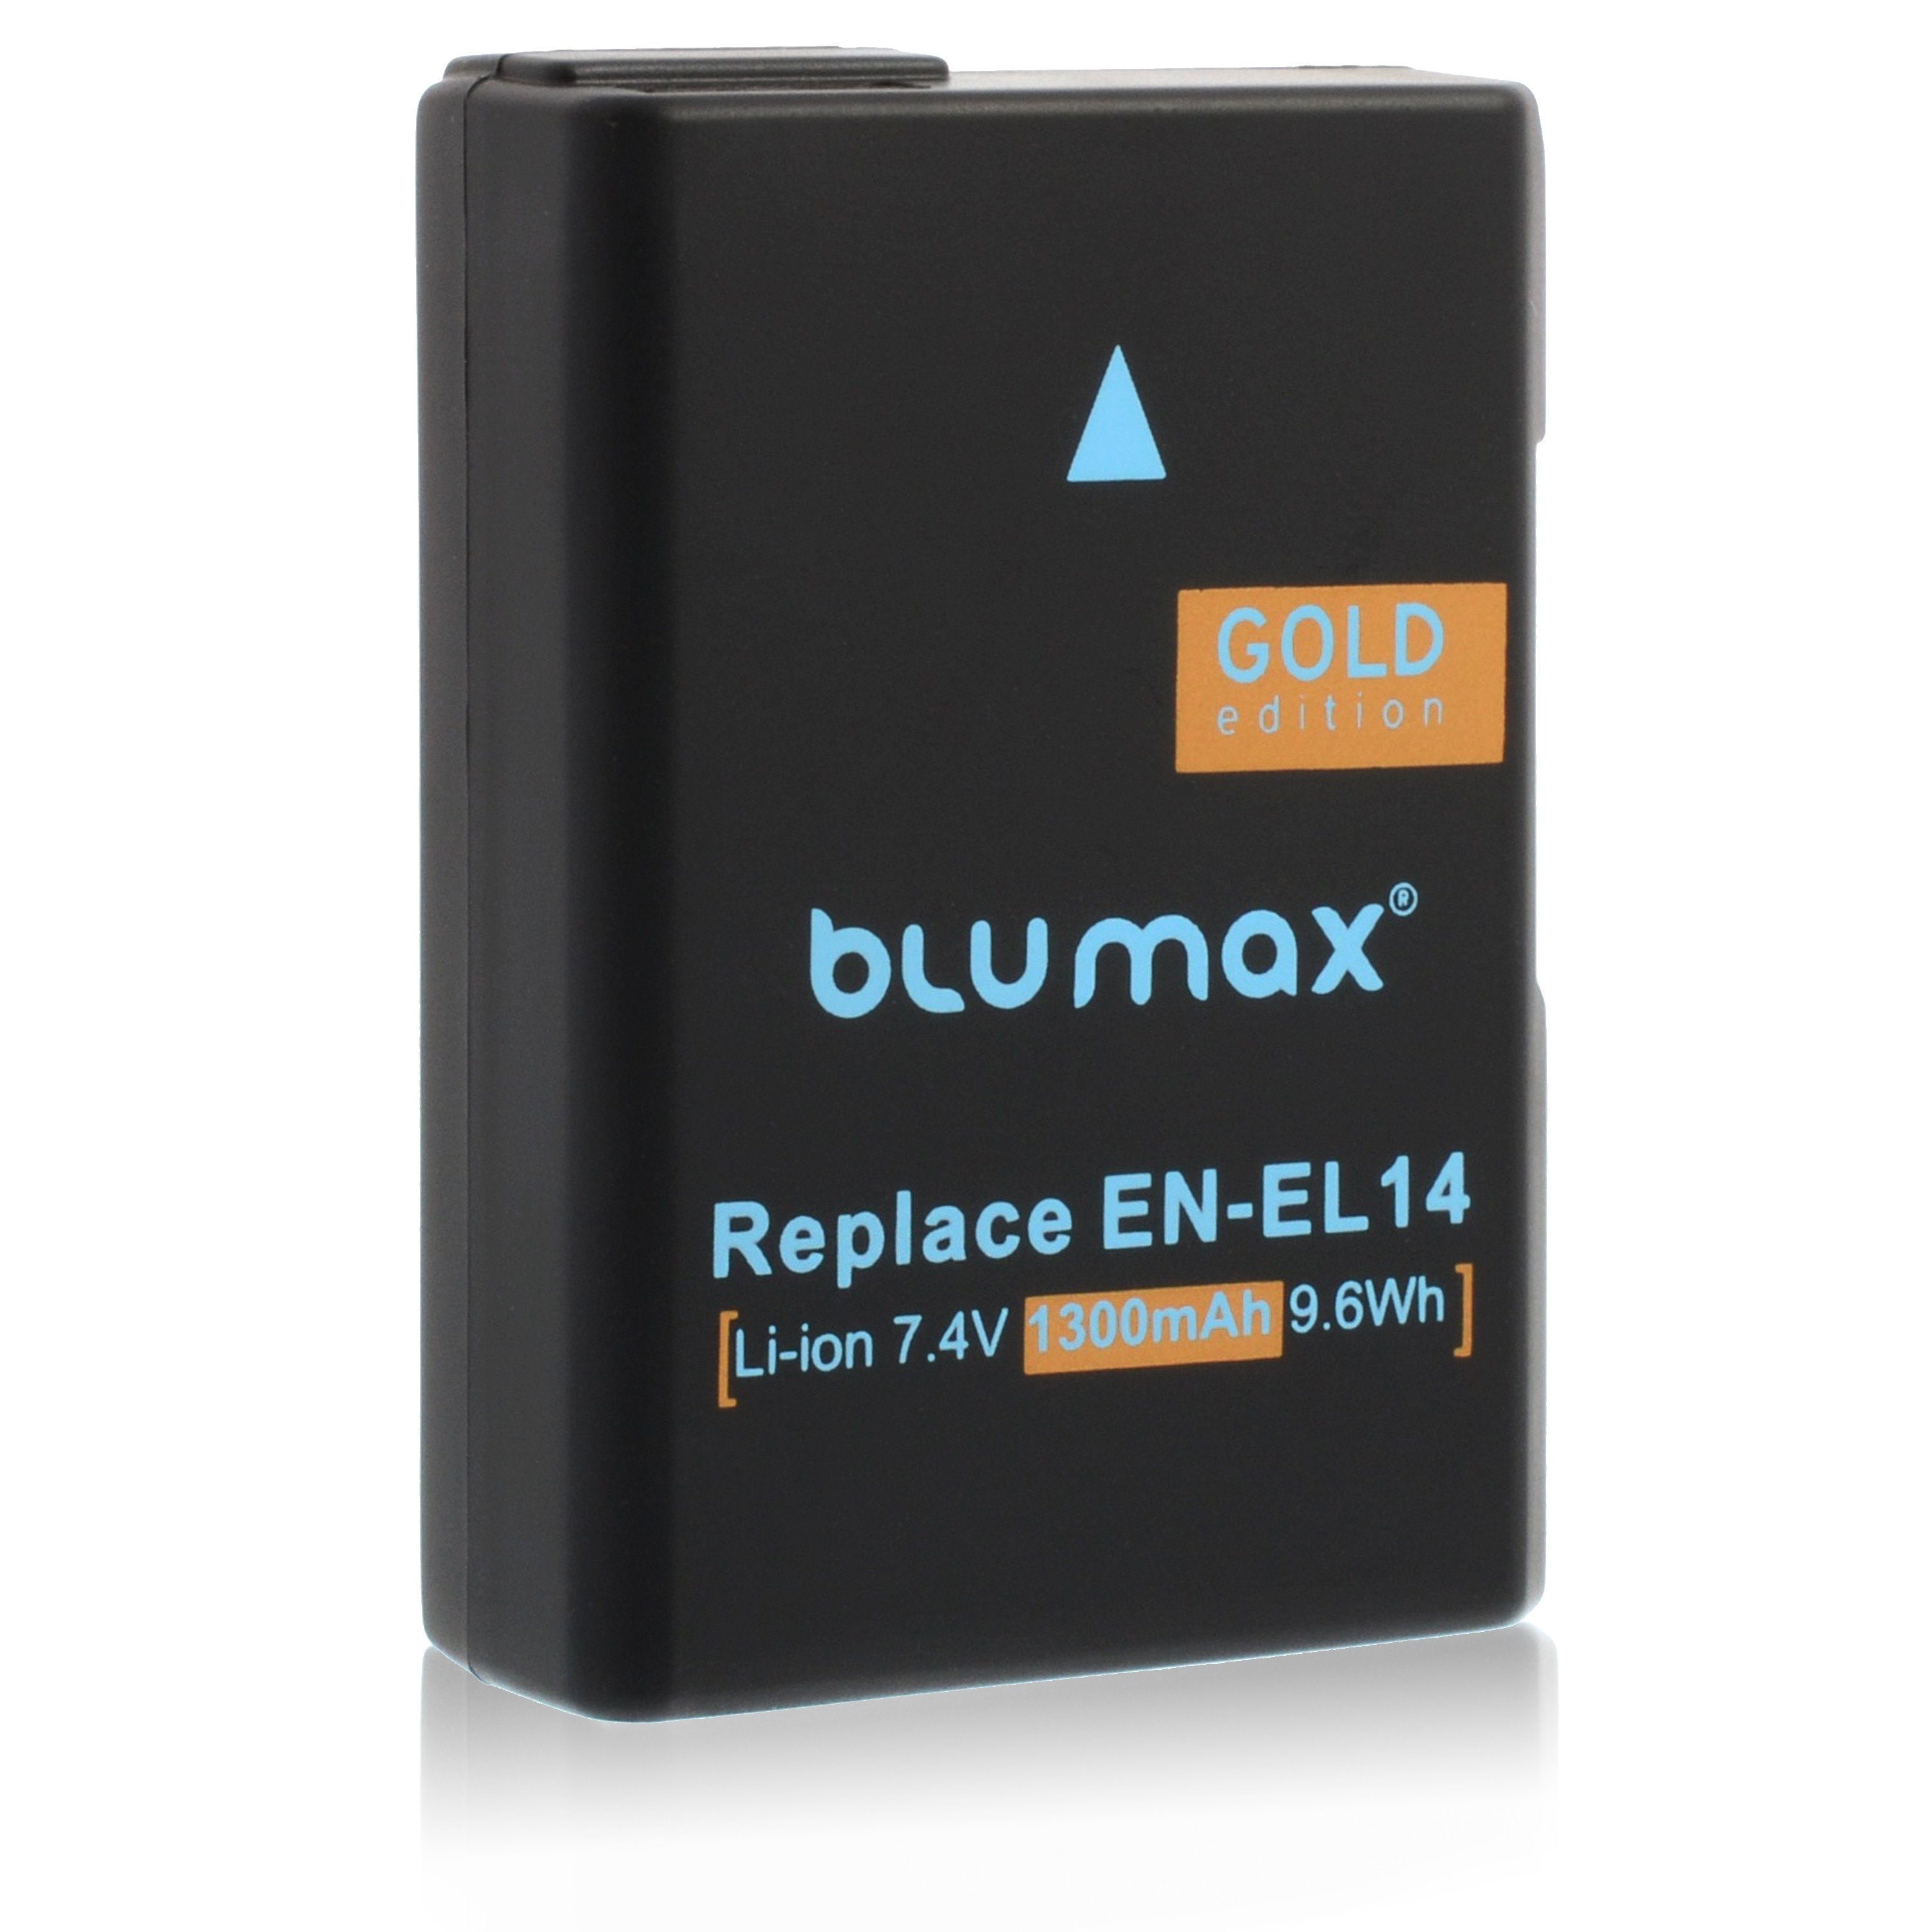 EL-EL14 passend 1300 für Blumax (7,4V) mAh Akku Nikon Kamera-Akku